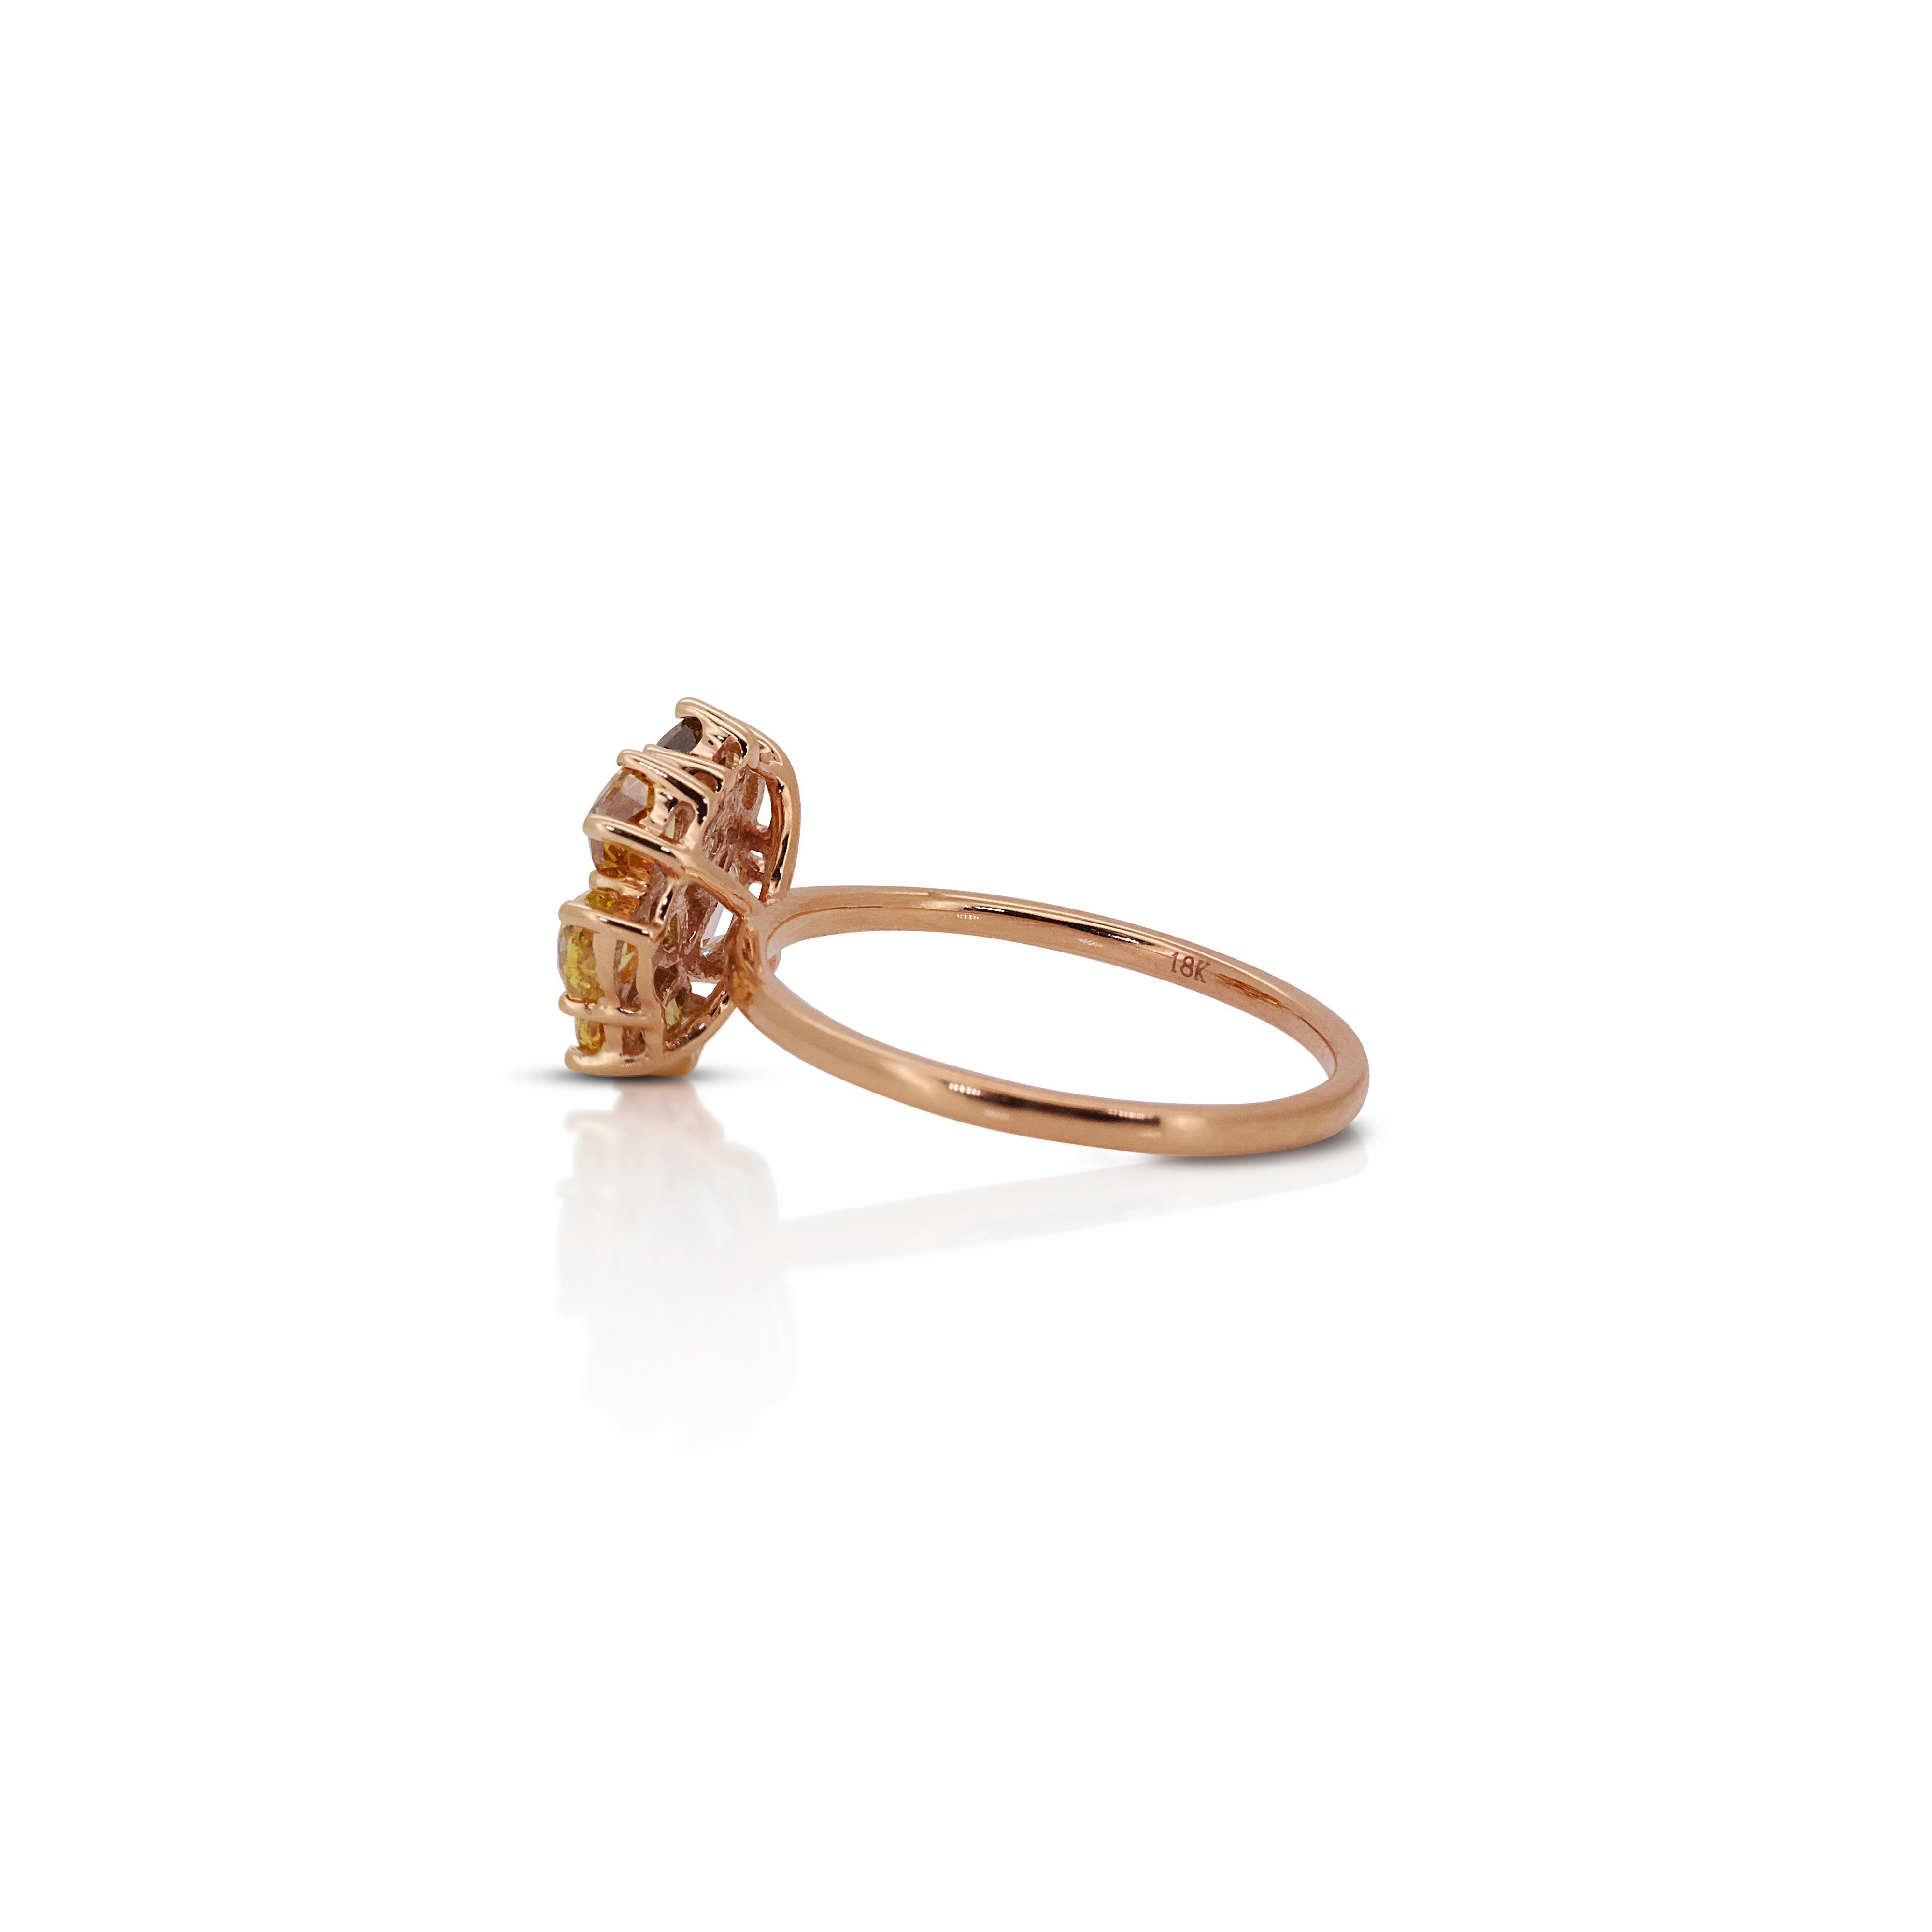 Elegant 18K Rose Gold Coloured Ring with 1.26 Ct Natural Diamonds, NGI Cert 8